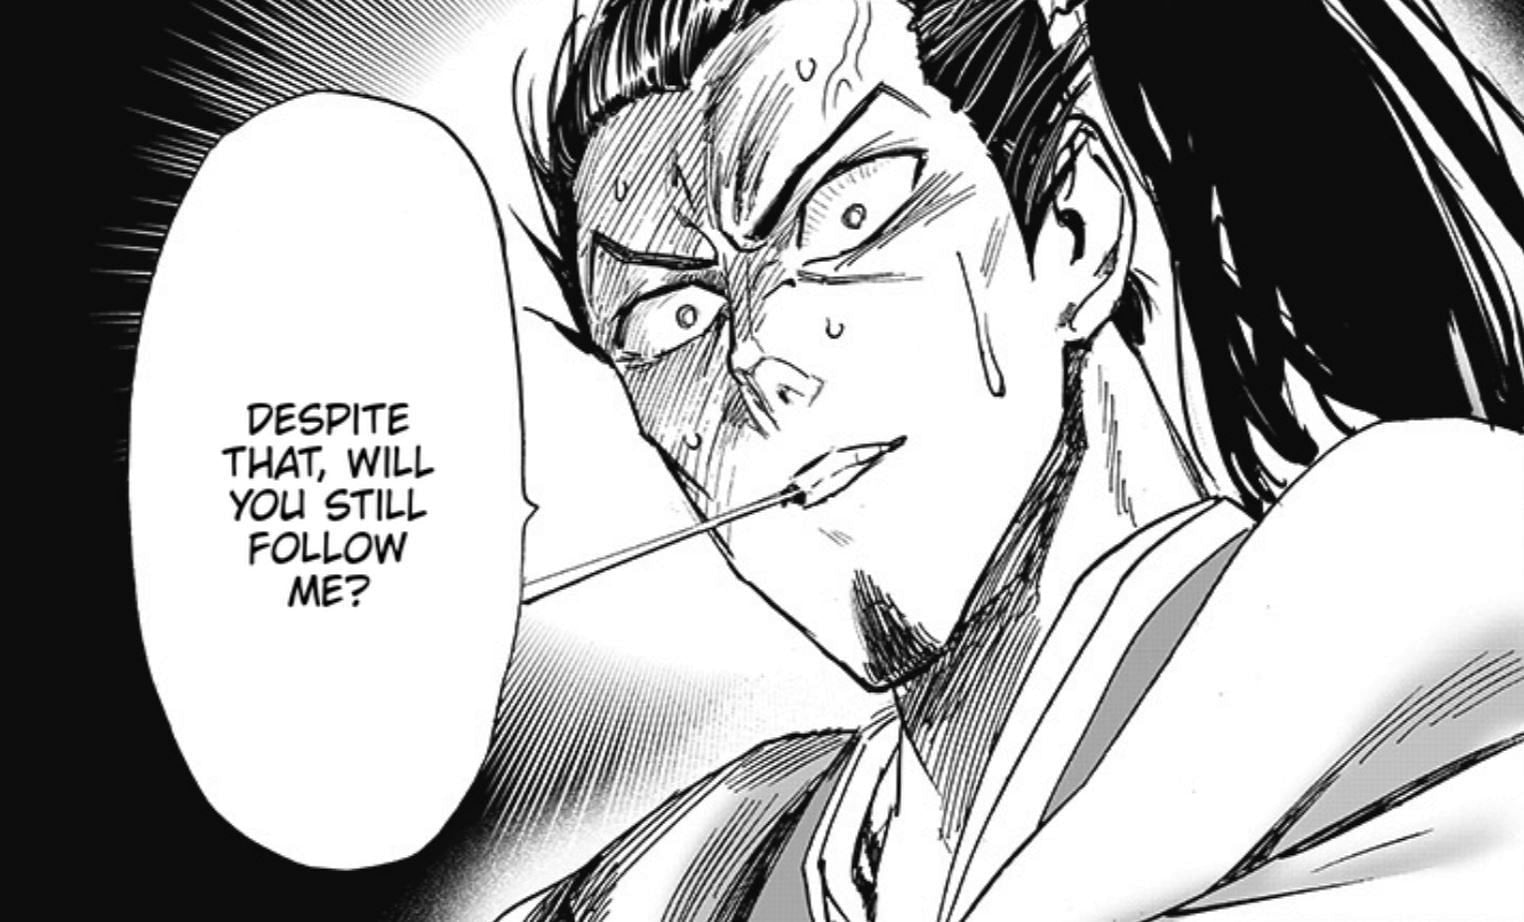 Atomic Samurai in One Punch Man chapter 189 (Image via Shueisha)